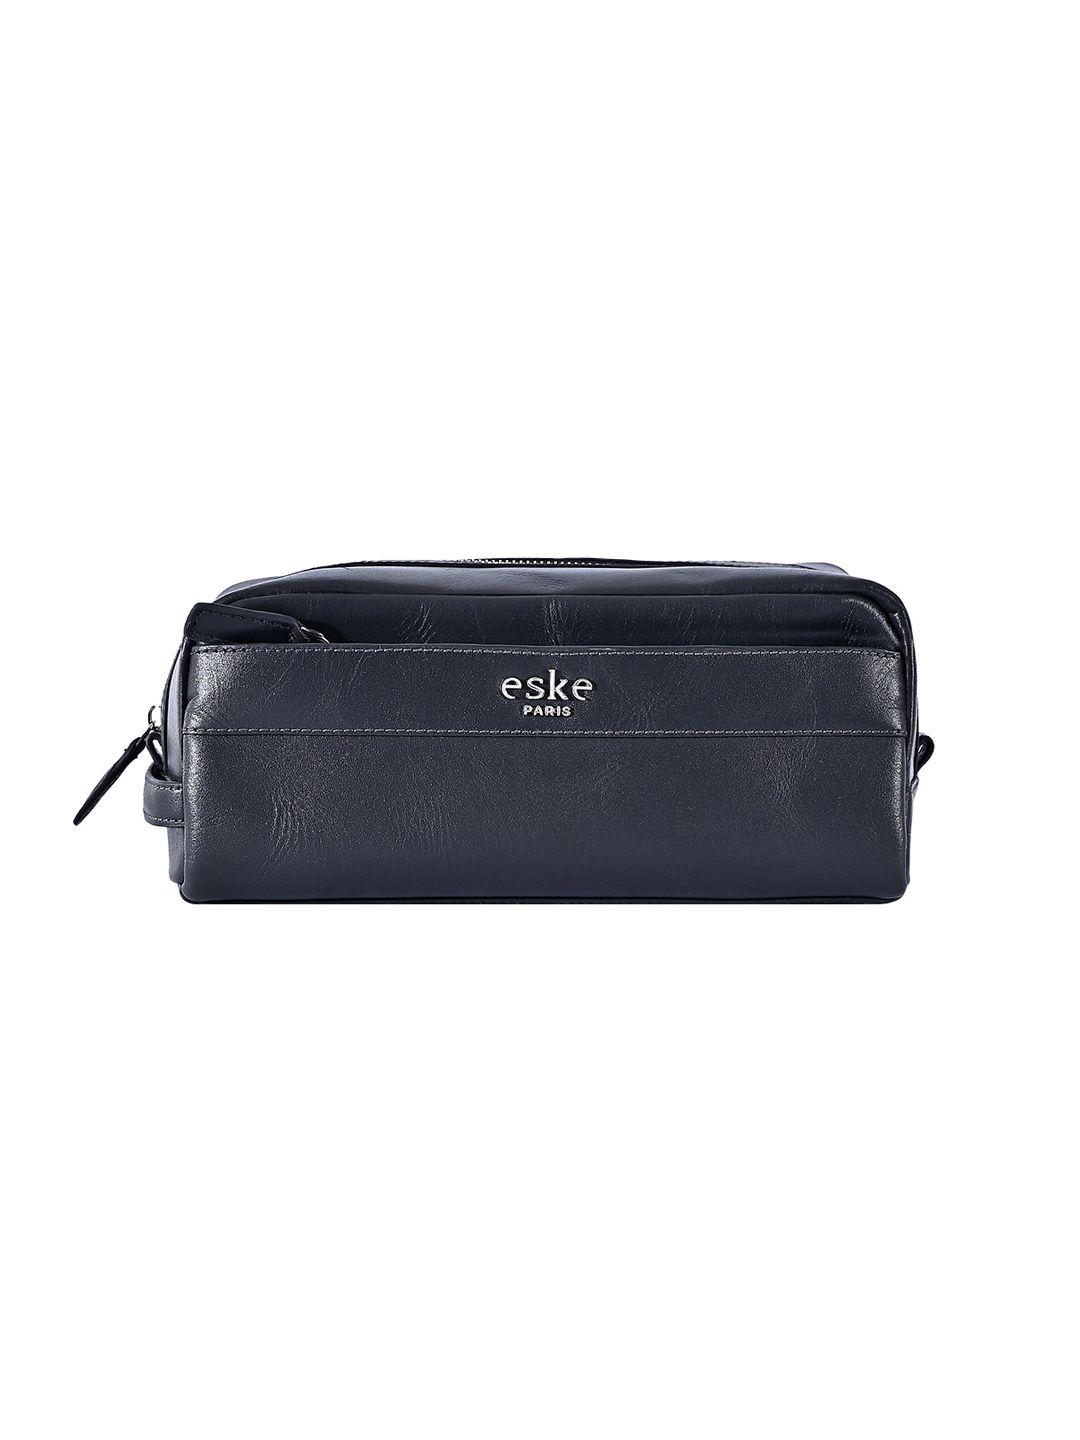 eske leather travel pouch